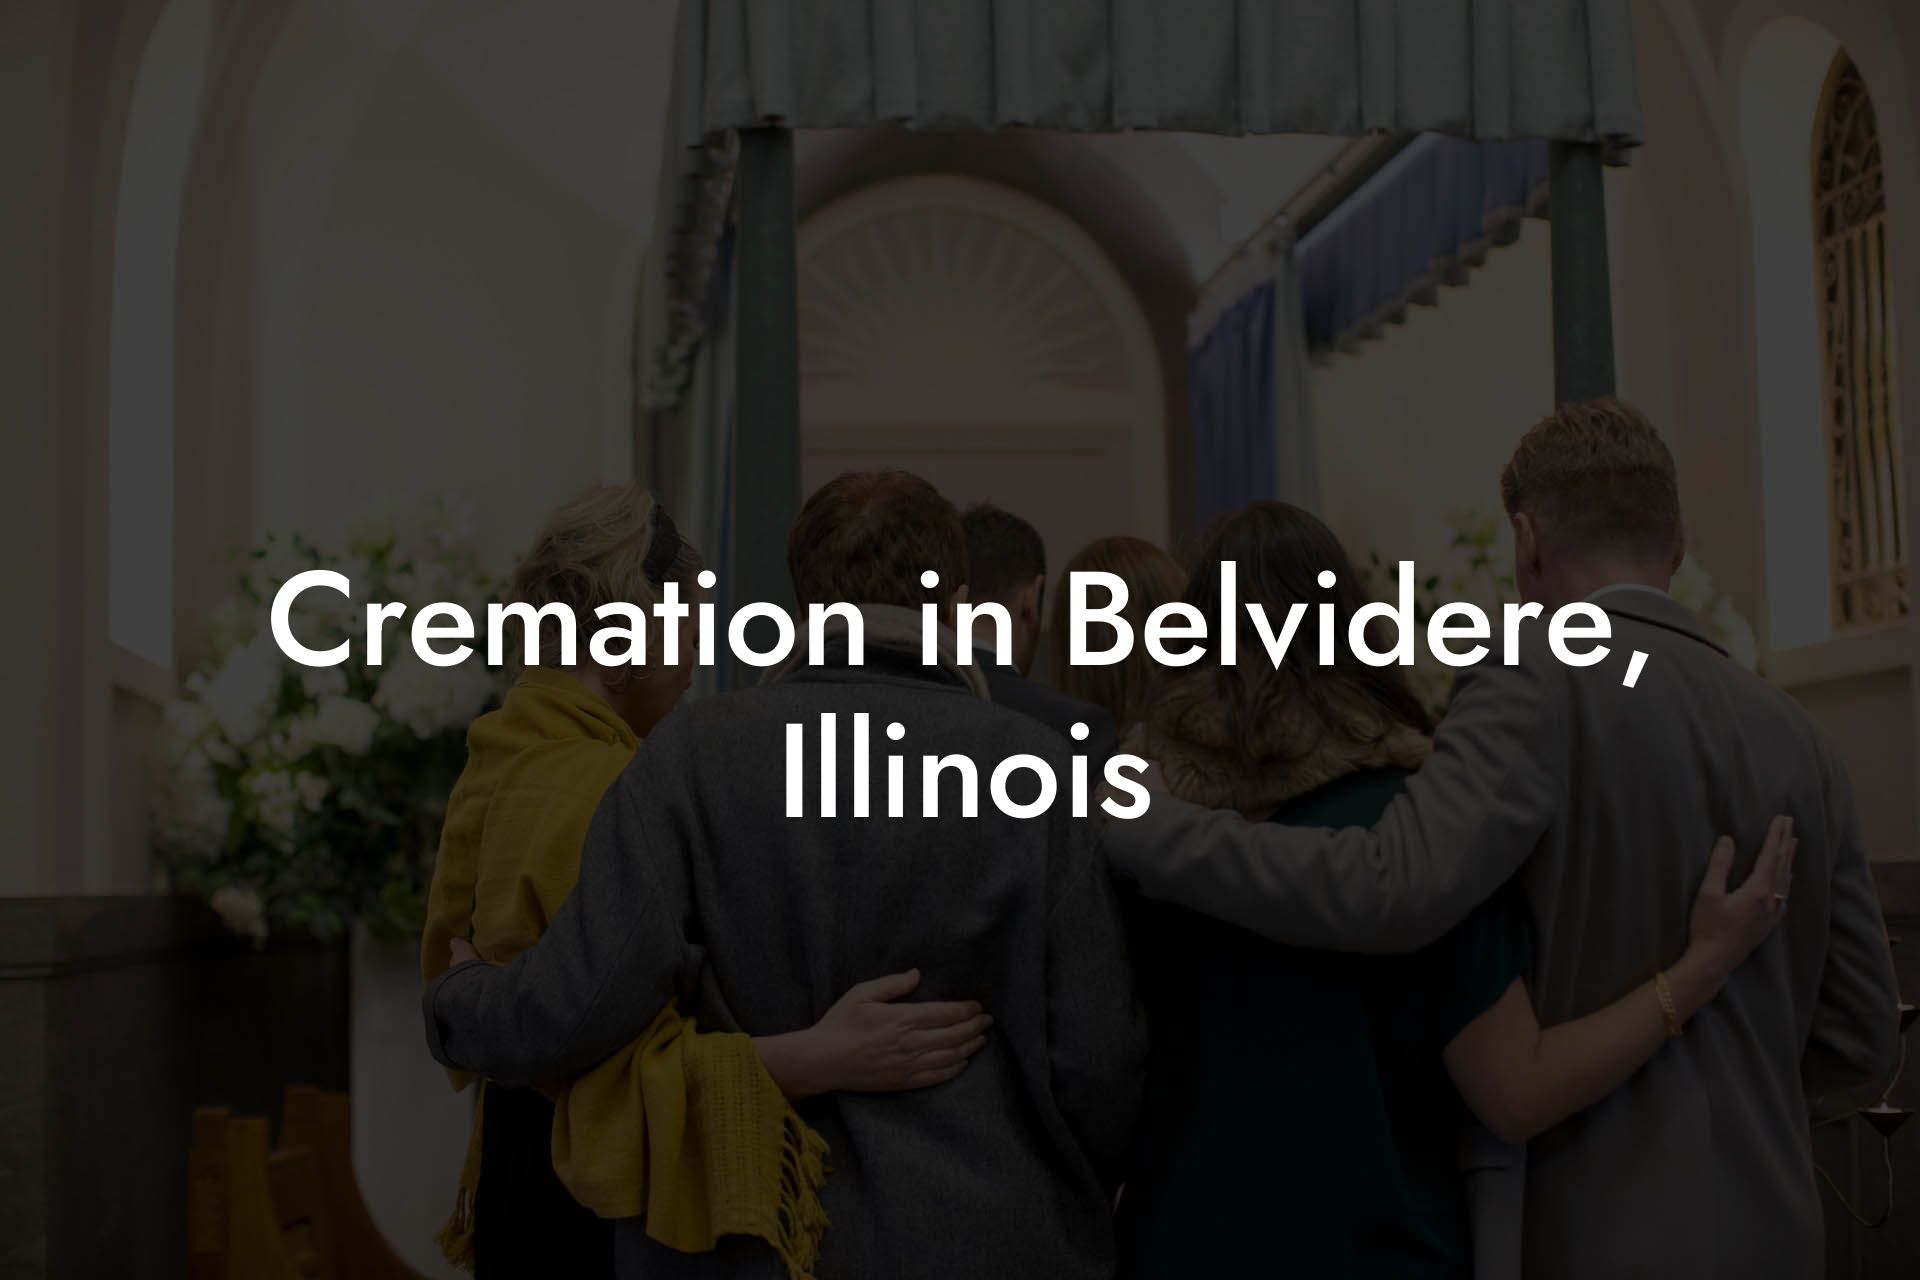 Cremation in Belvidere, Illinois